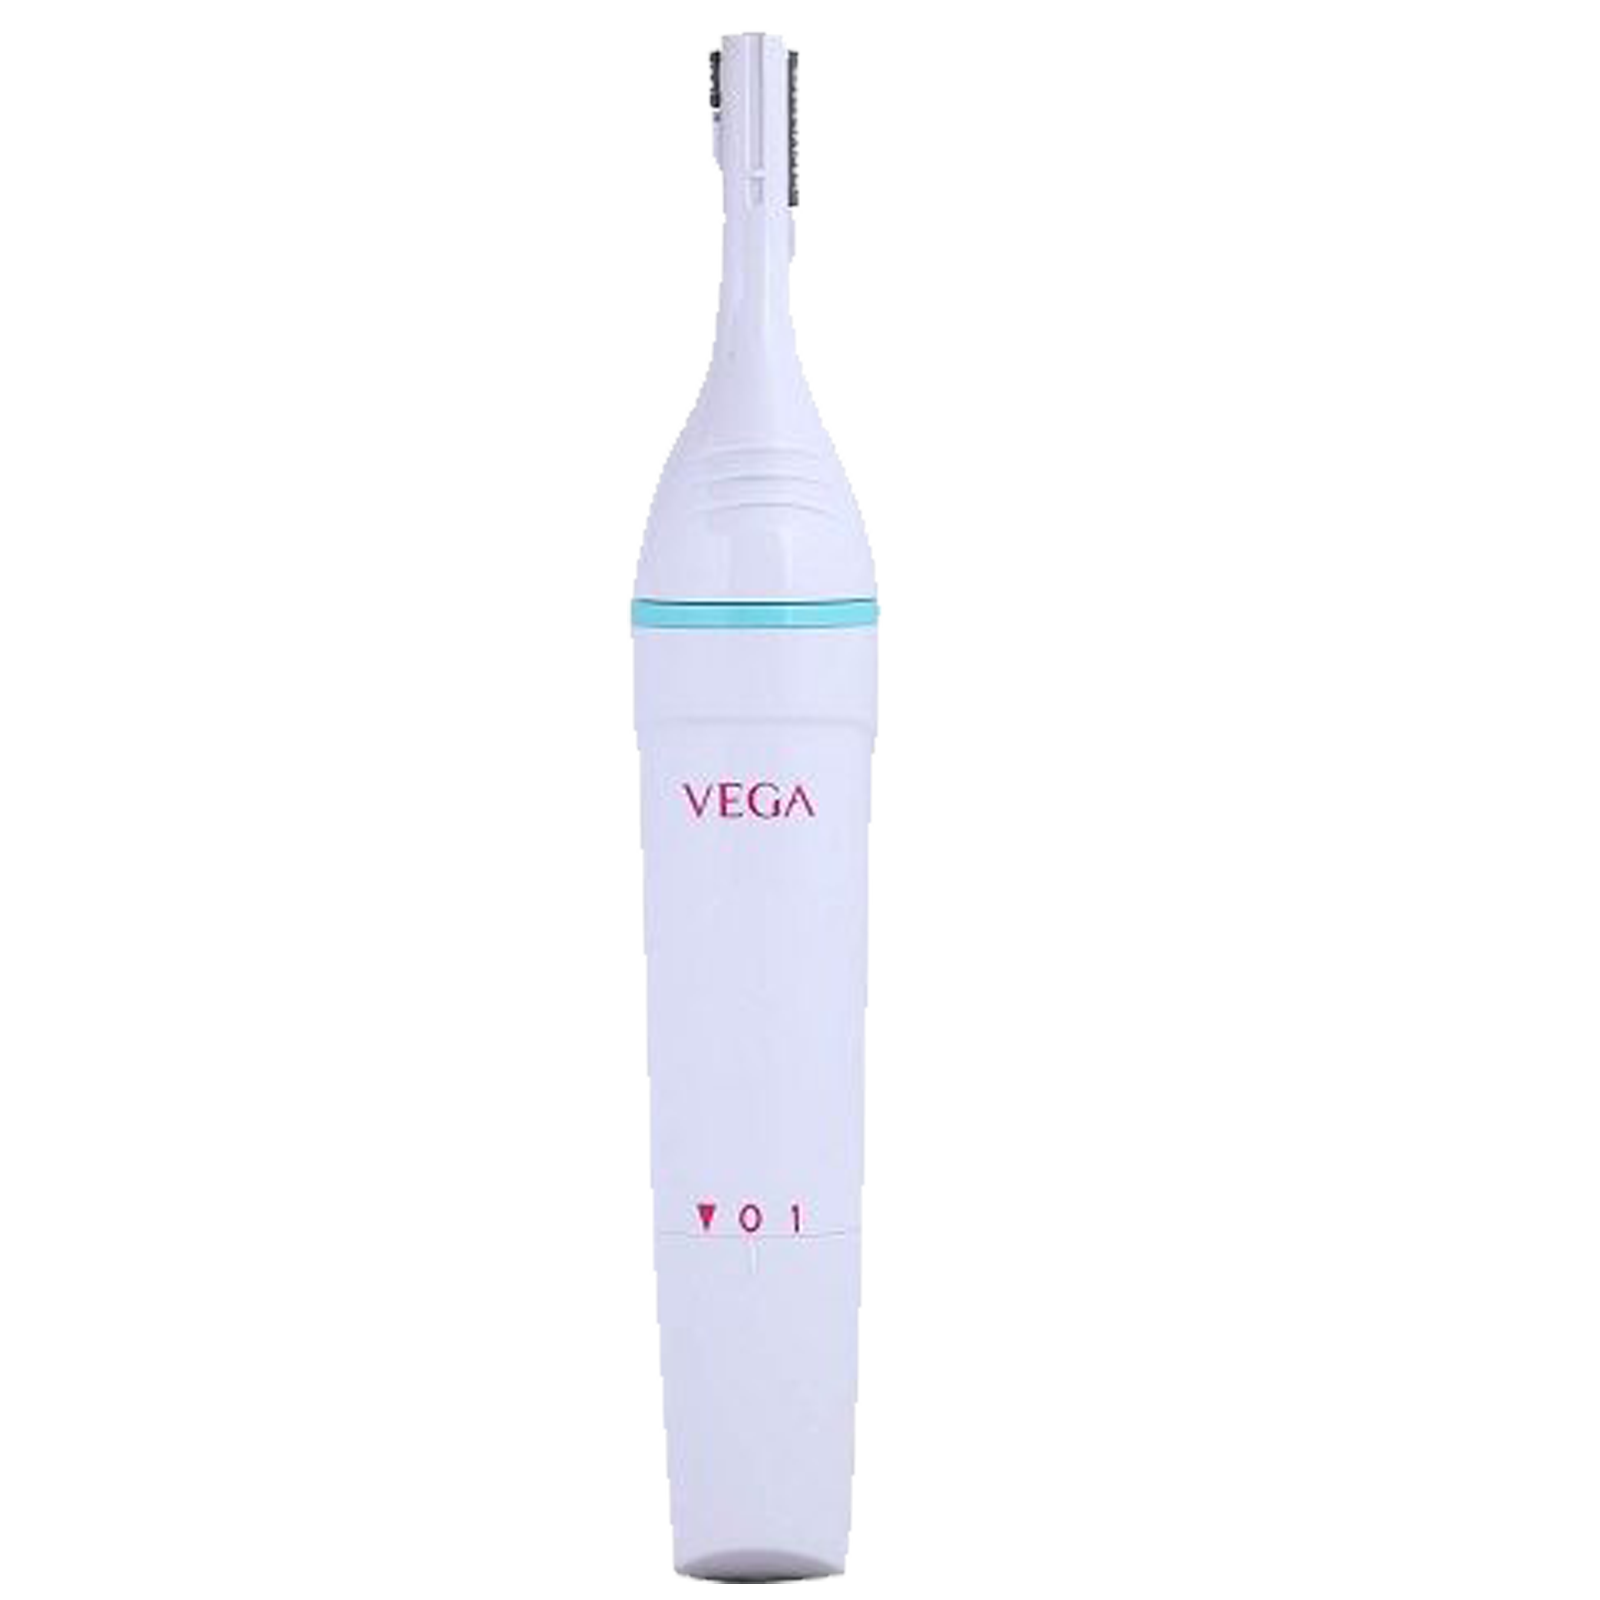 Vega Silk Touch Stainless Steel Blades Cordless Trimmer (250 Min Battery Run Time, VHBT-01, White)_1